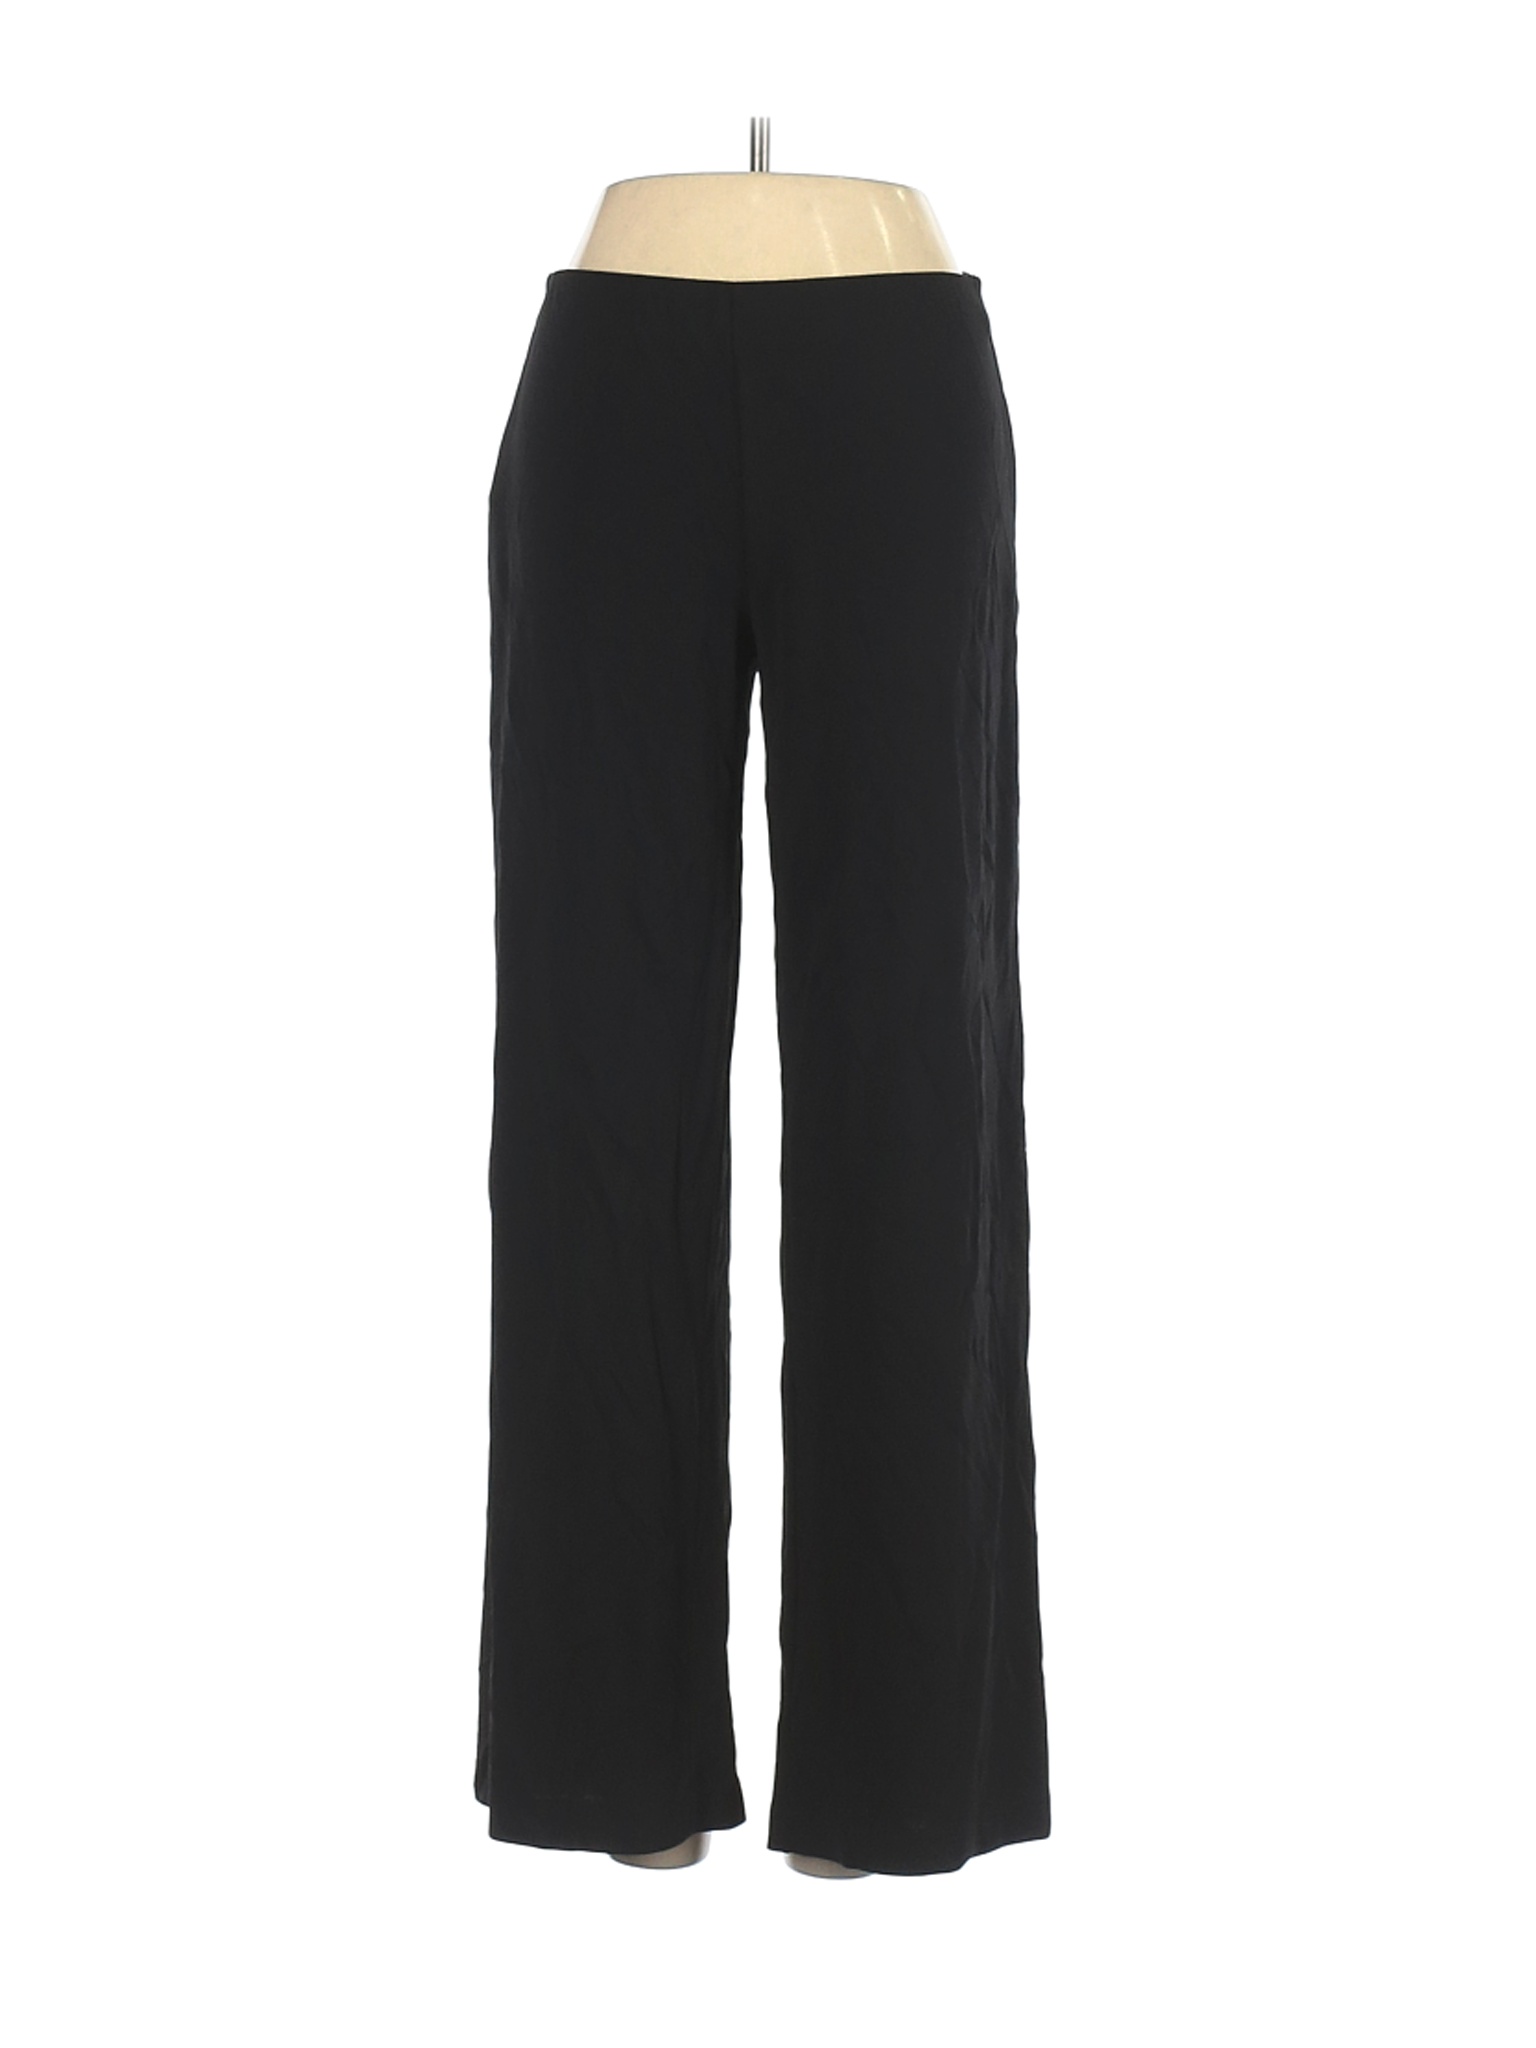 Max Studio Women Black Casual Pants S | eBay